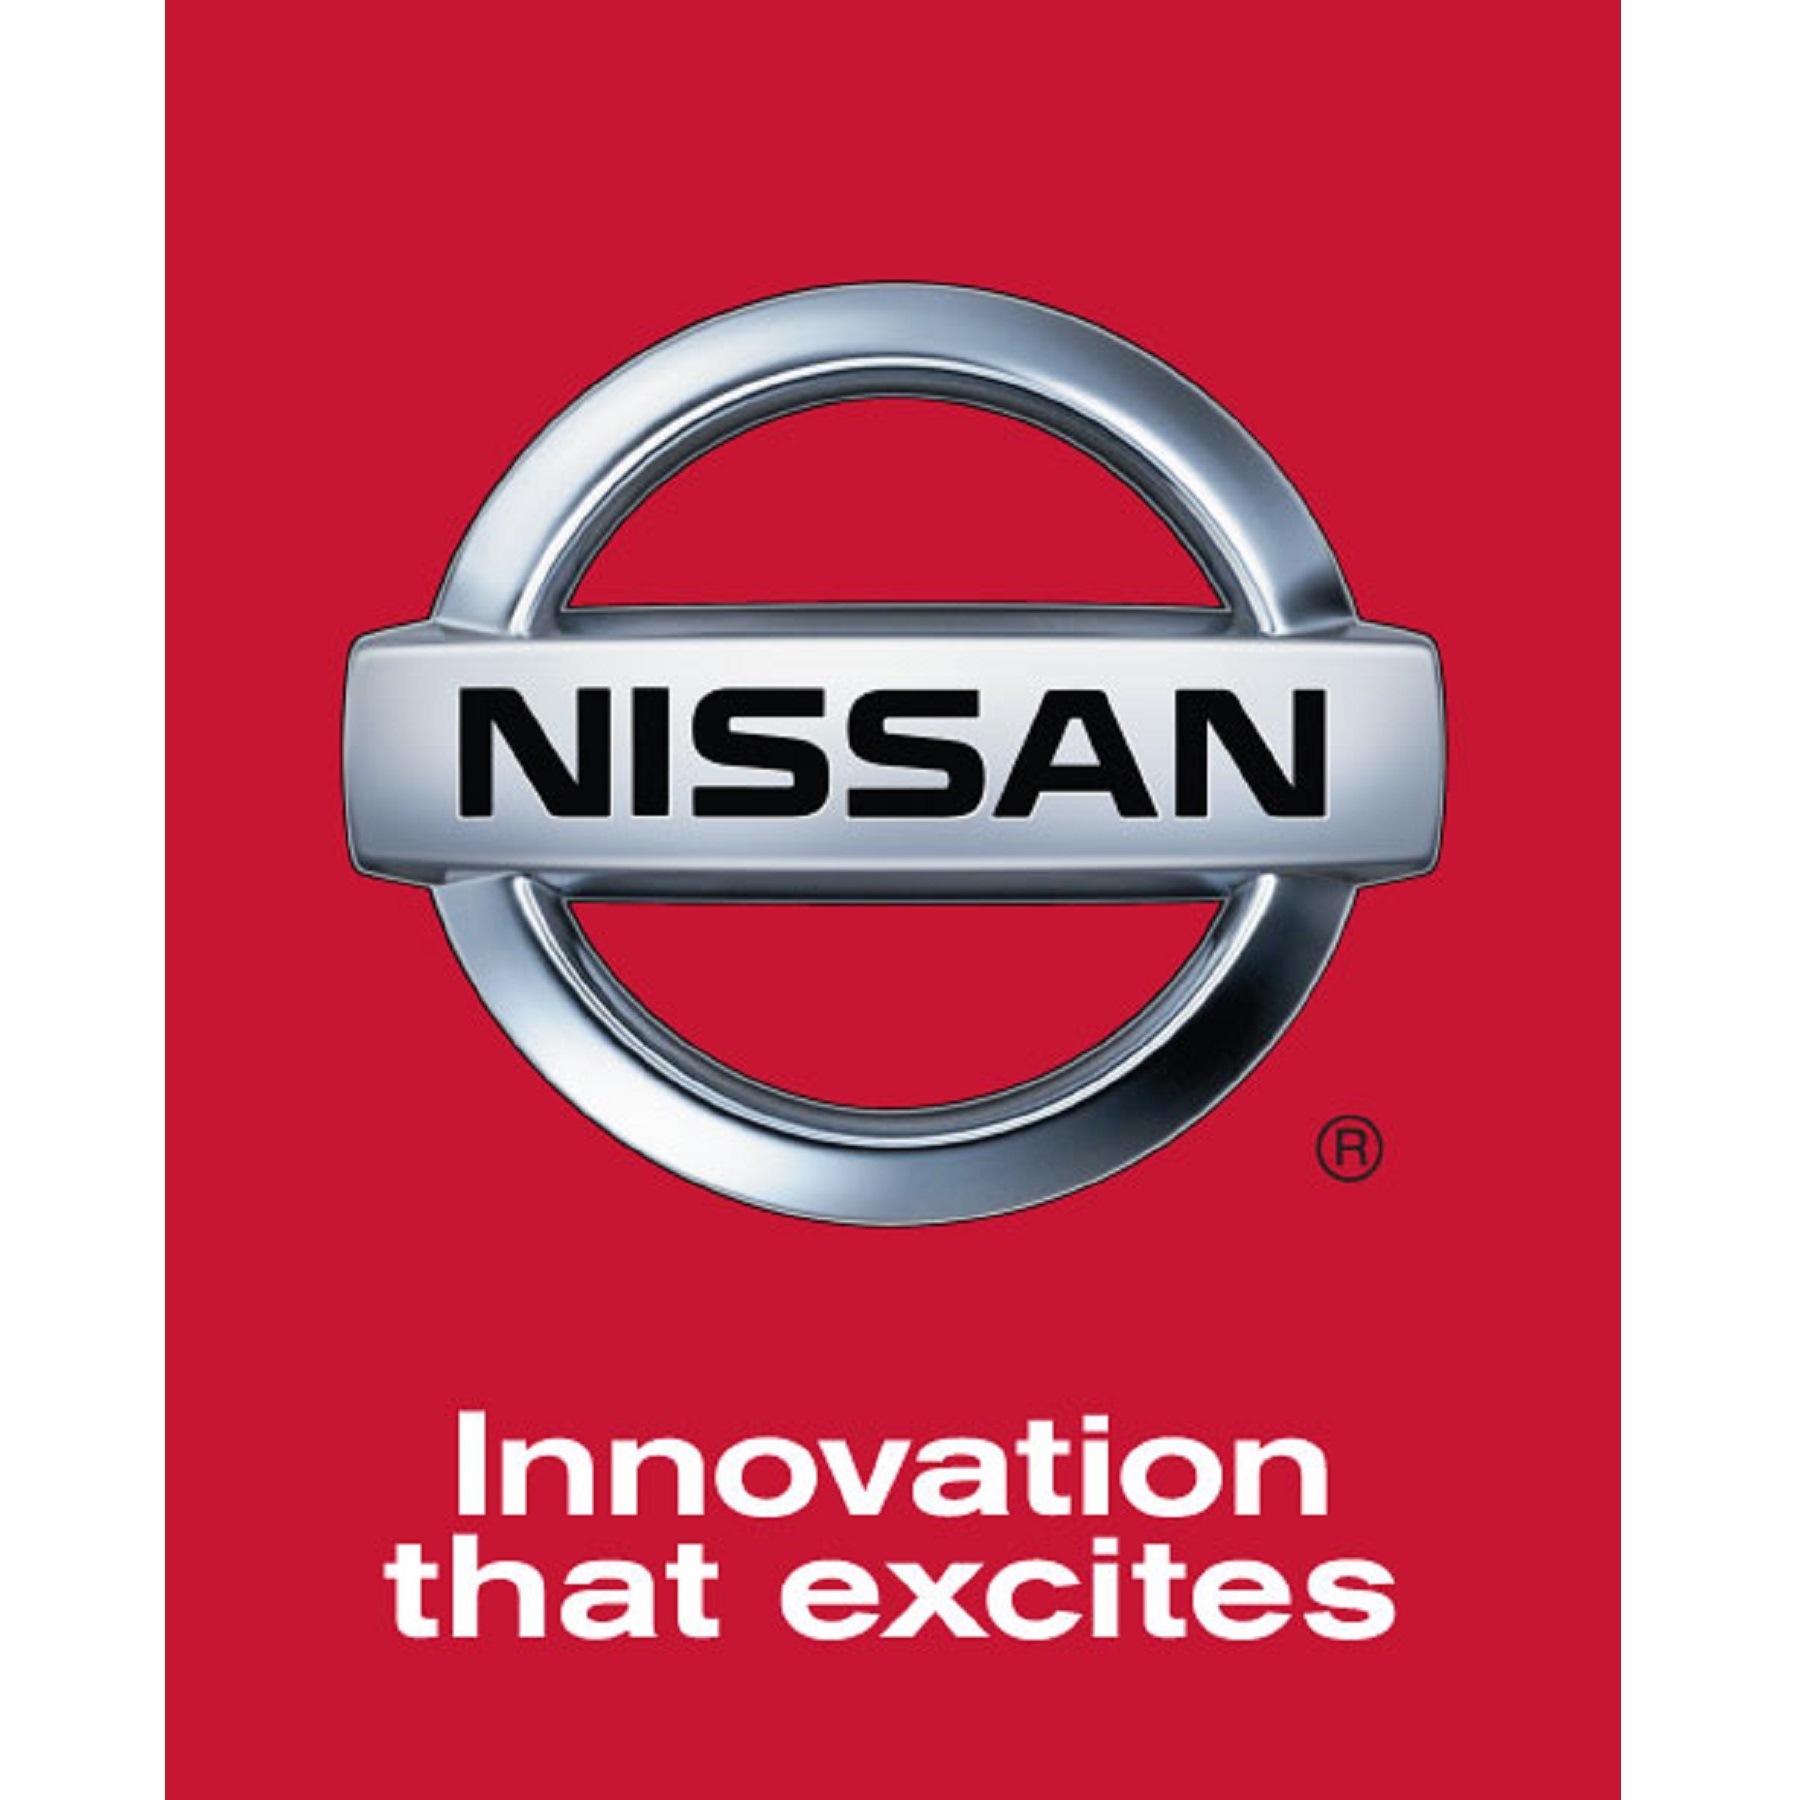 Nissan Logos | www.logoary.com - Popular Brands & Company Logos!